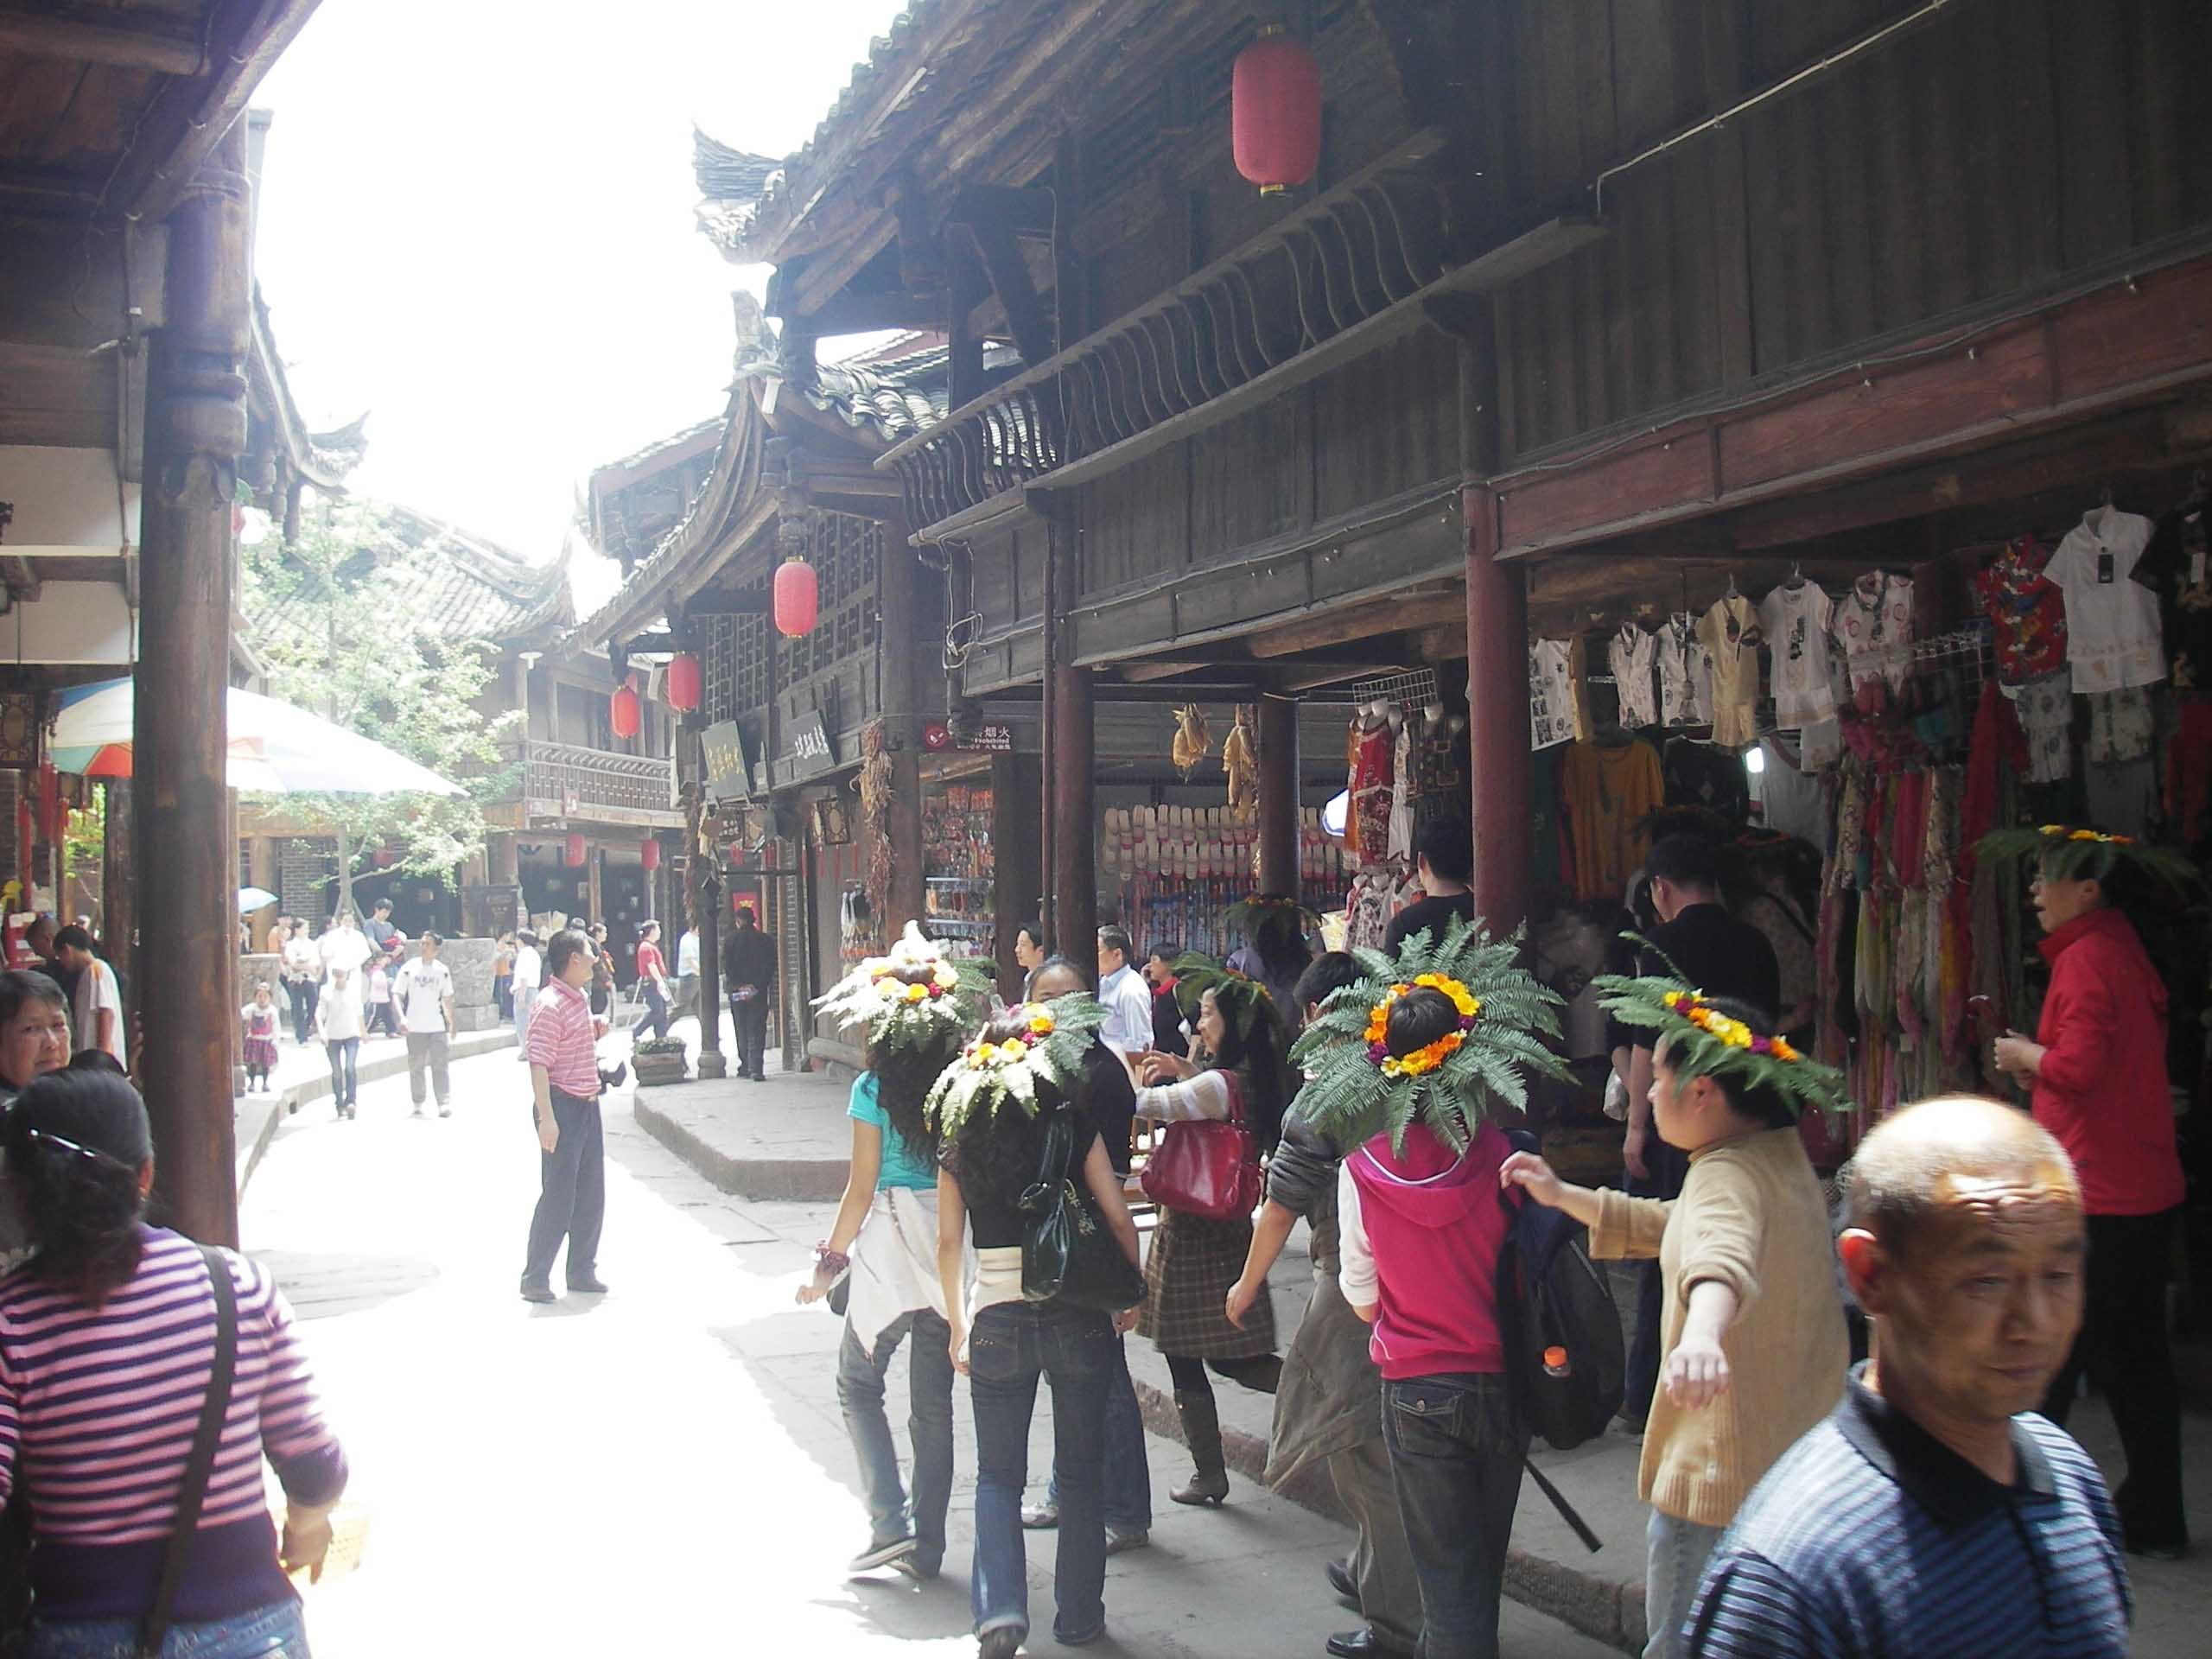 People walking down the street in Yellow Dragon Town in China.